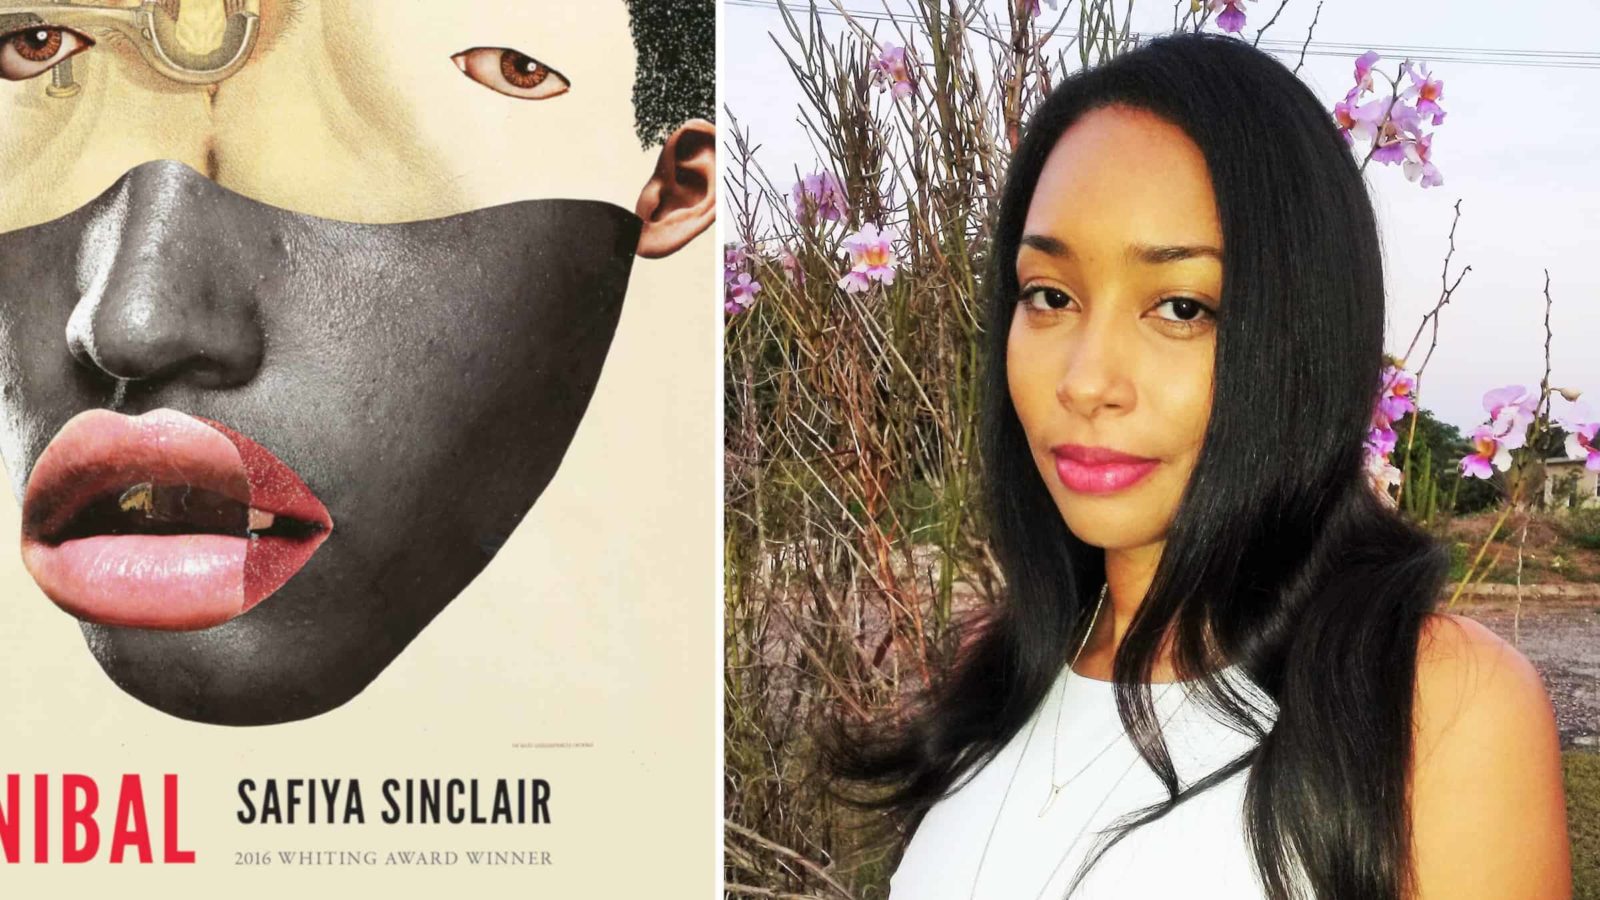 Awardwinning poet Safiya Sinclair has won the Whiting Award for her book 'Cannibal.' Photo courtesy of Safiya Sinclair